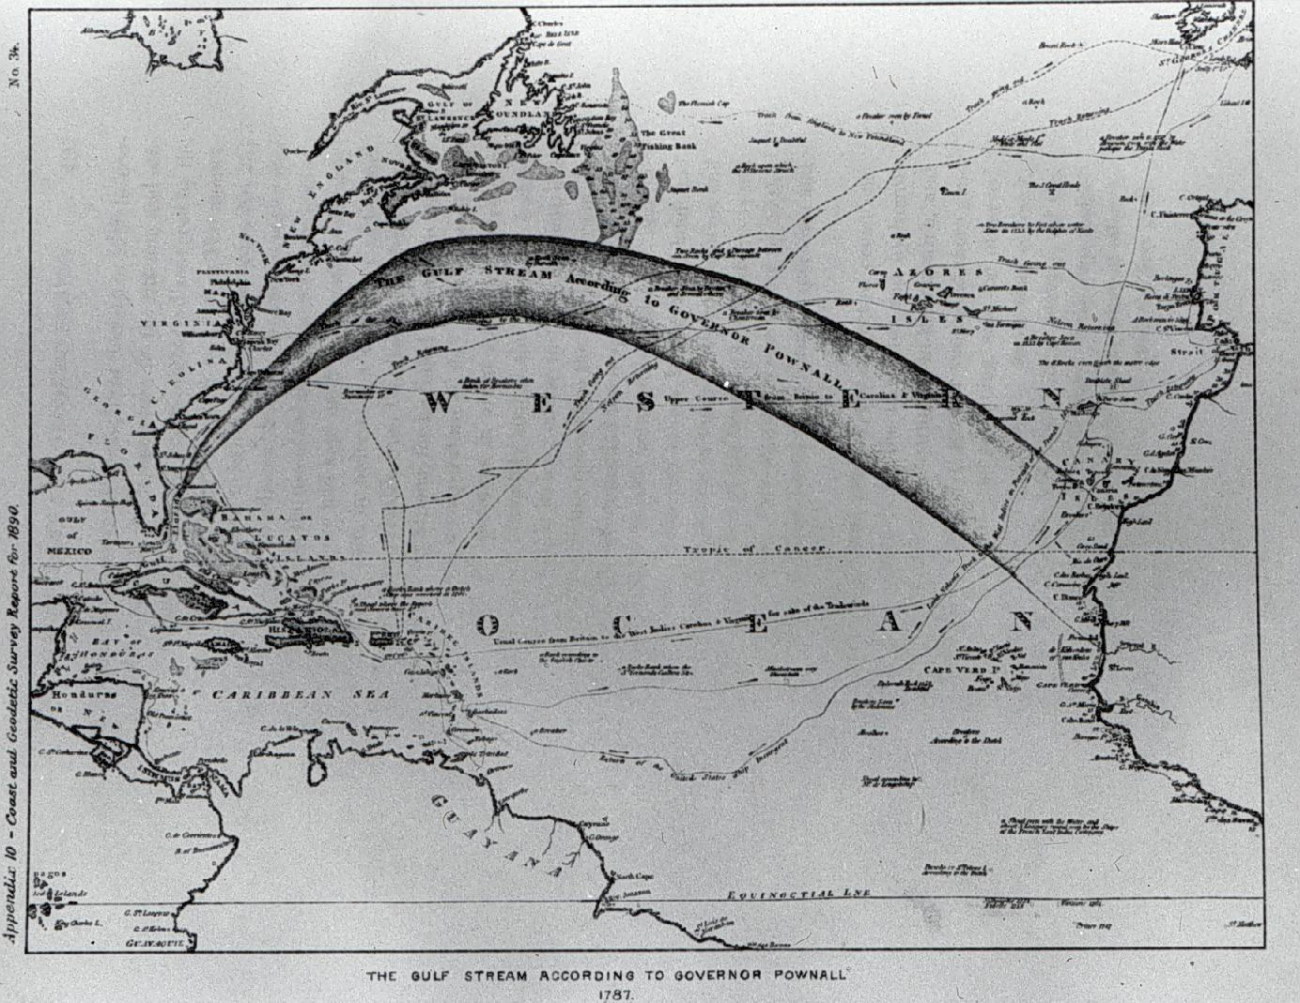 The Gulf Stream by Governor Pownall